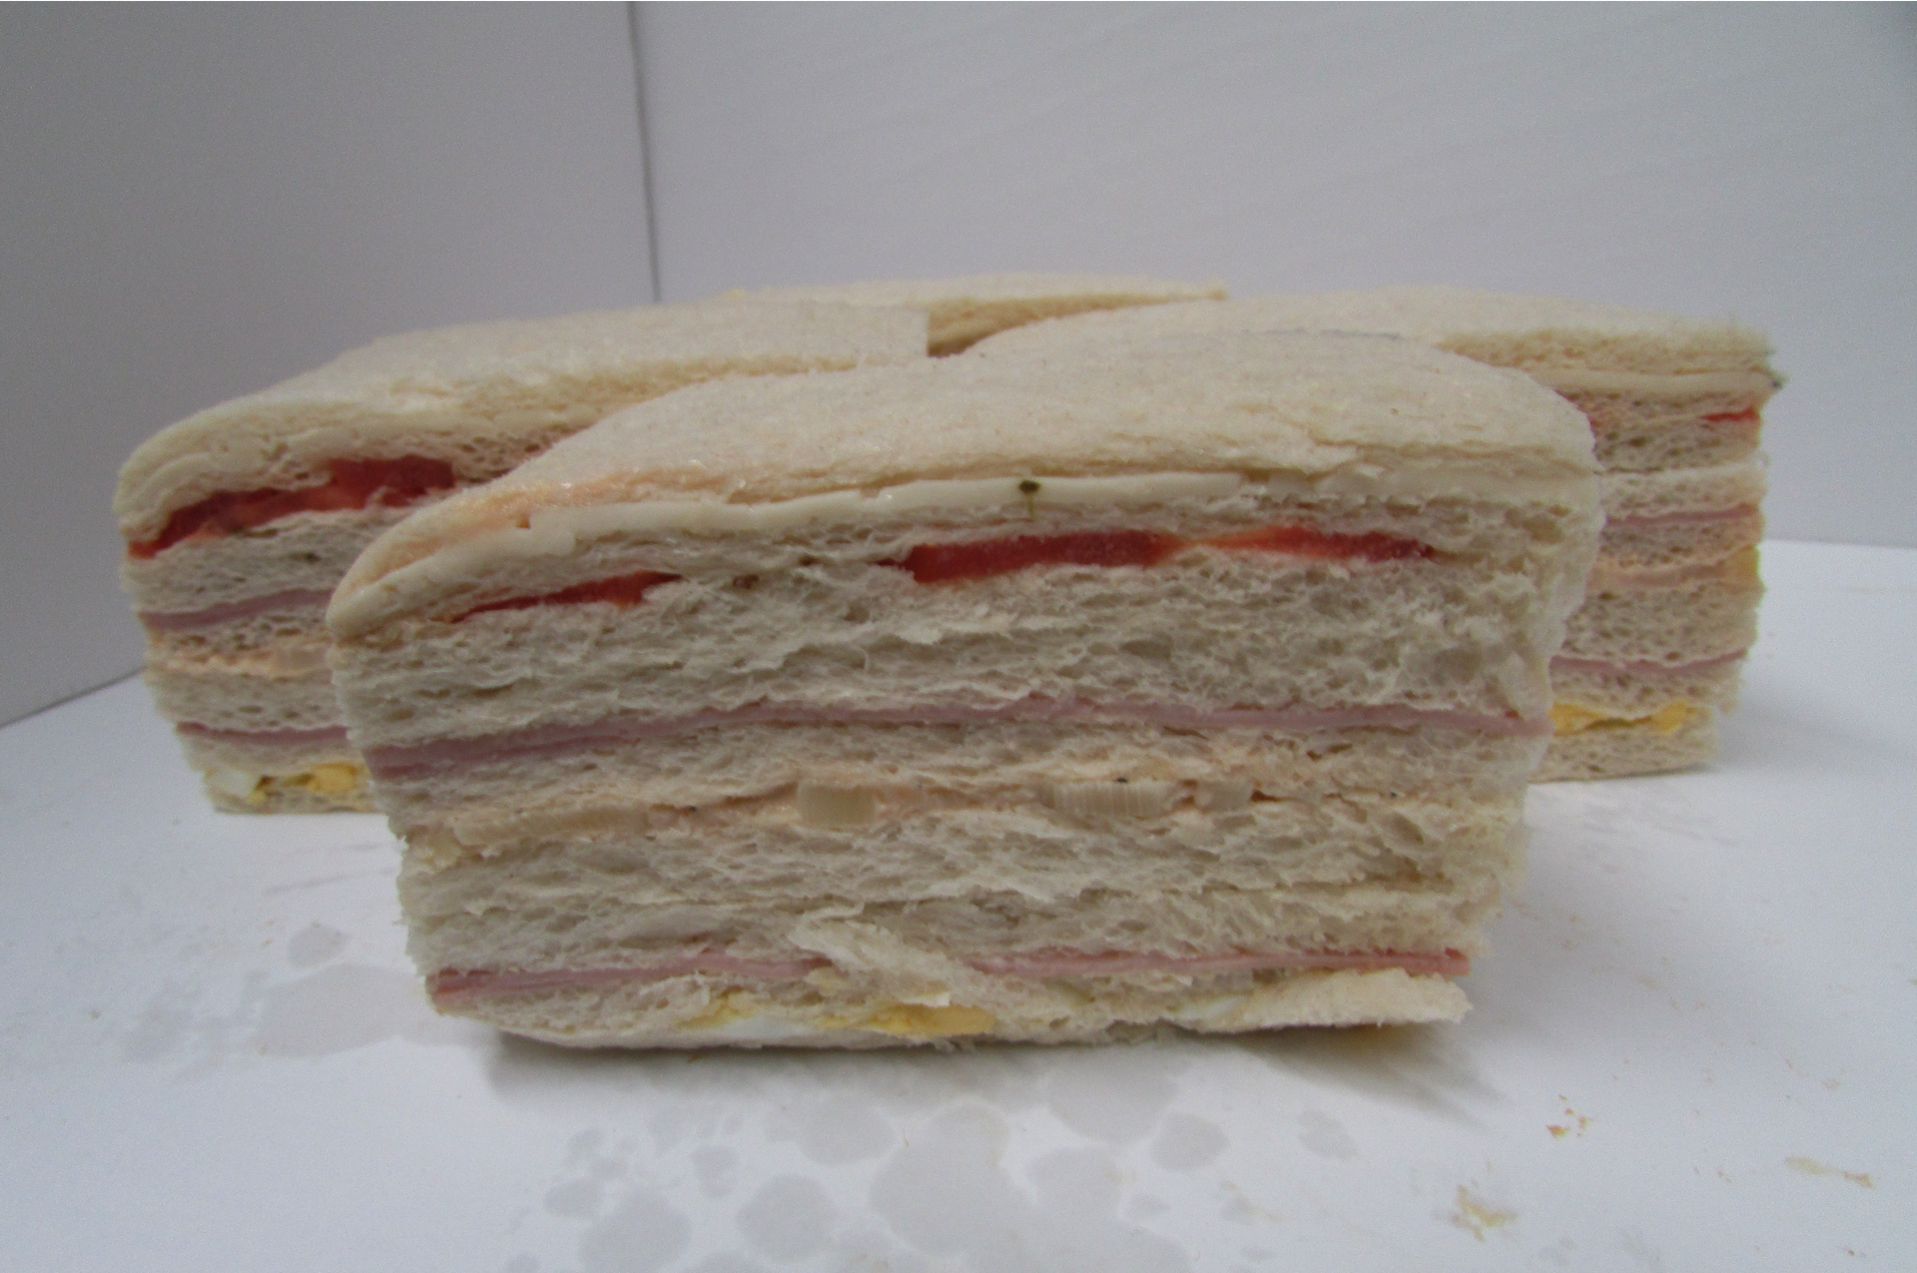 Sandwich de Miga,Empanadas 2 GO,sandwiches de pan de miga,pan de miga